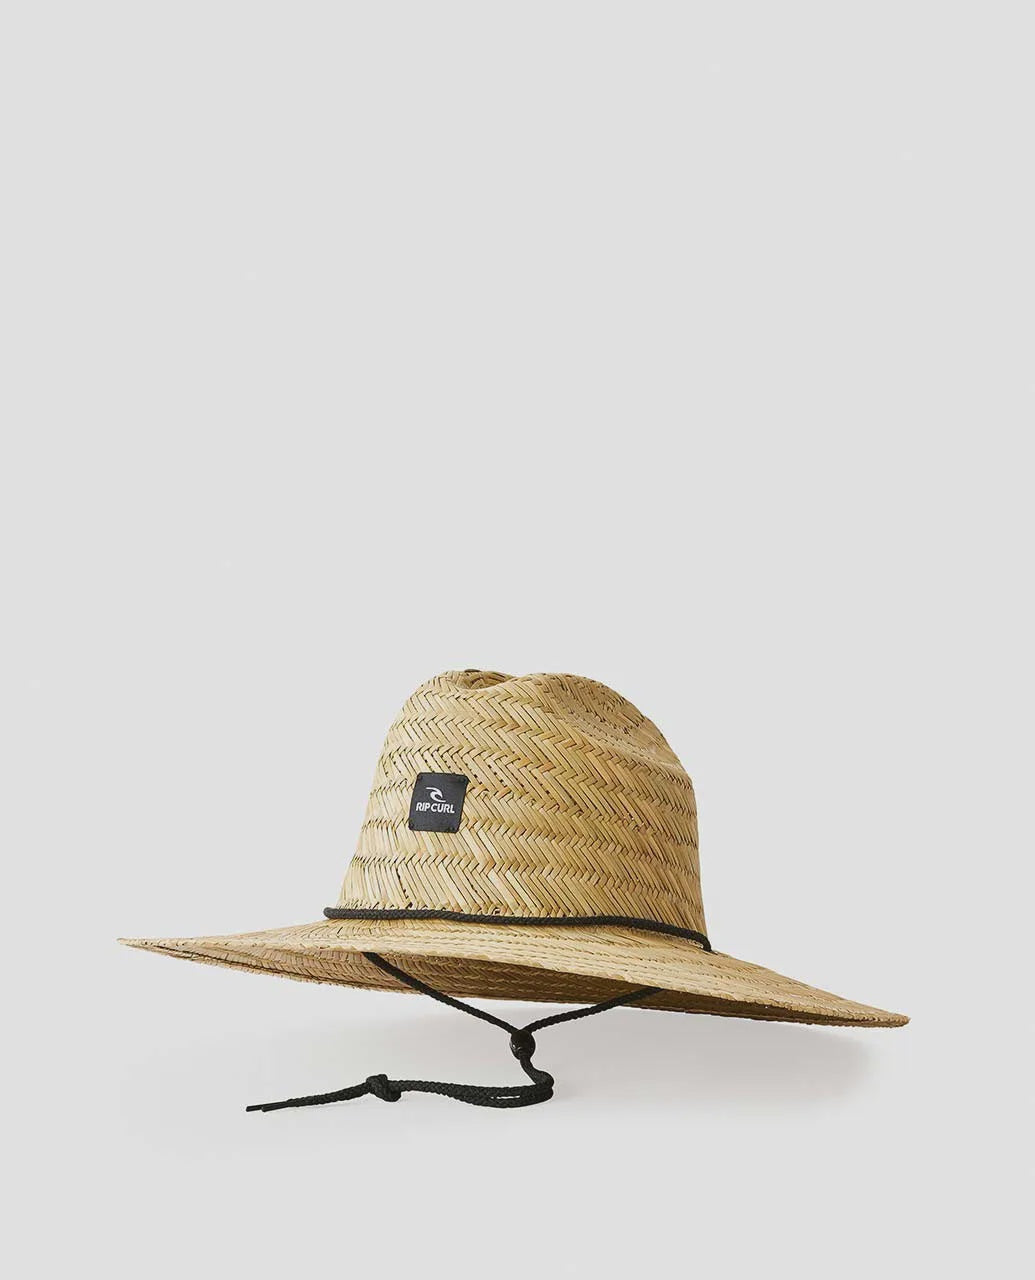 Brand Straw Hat